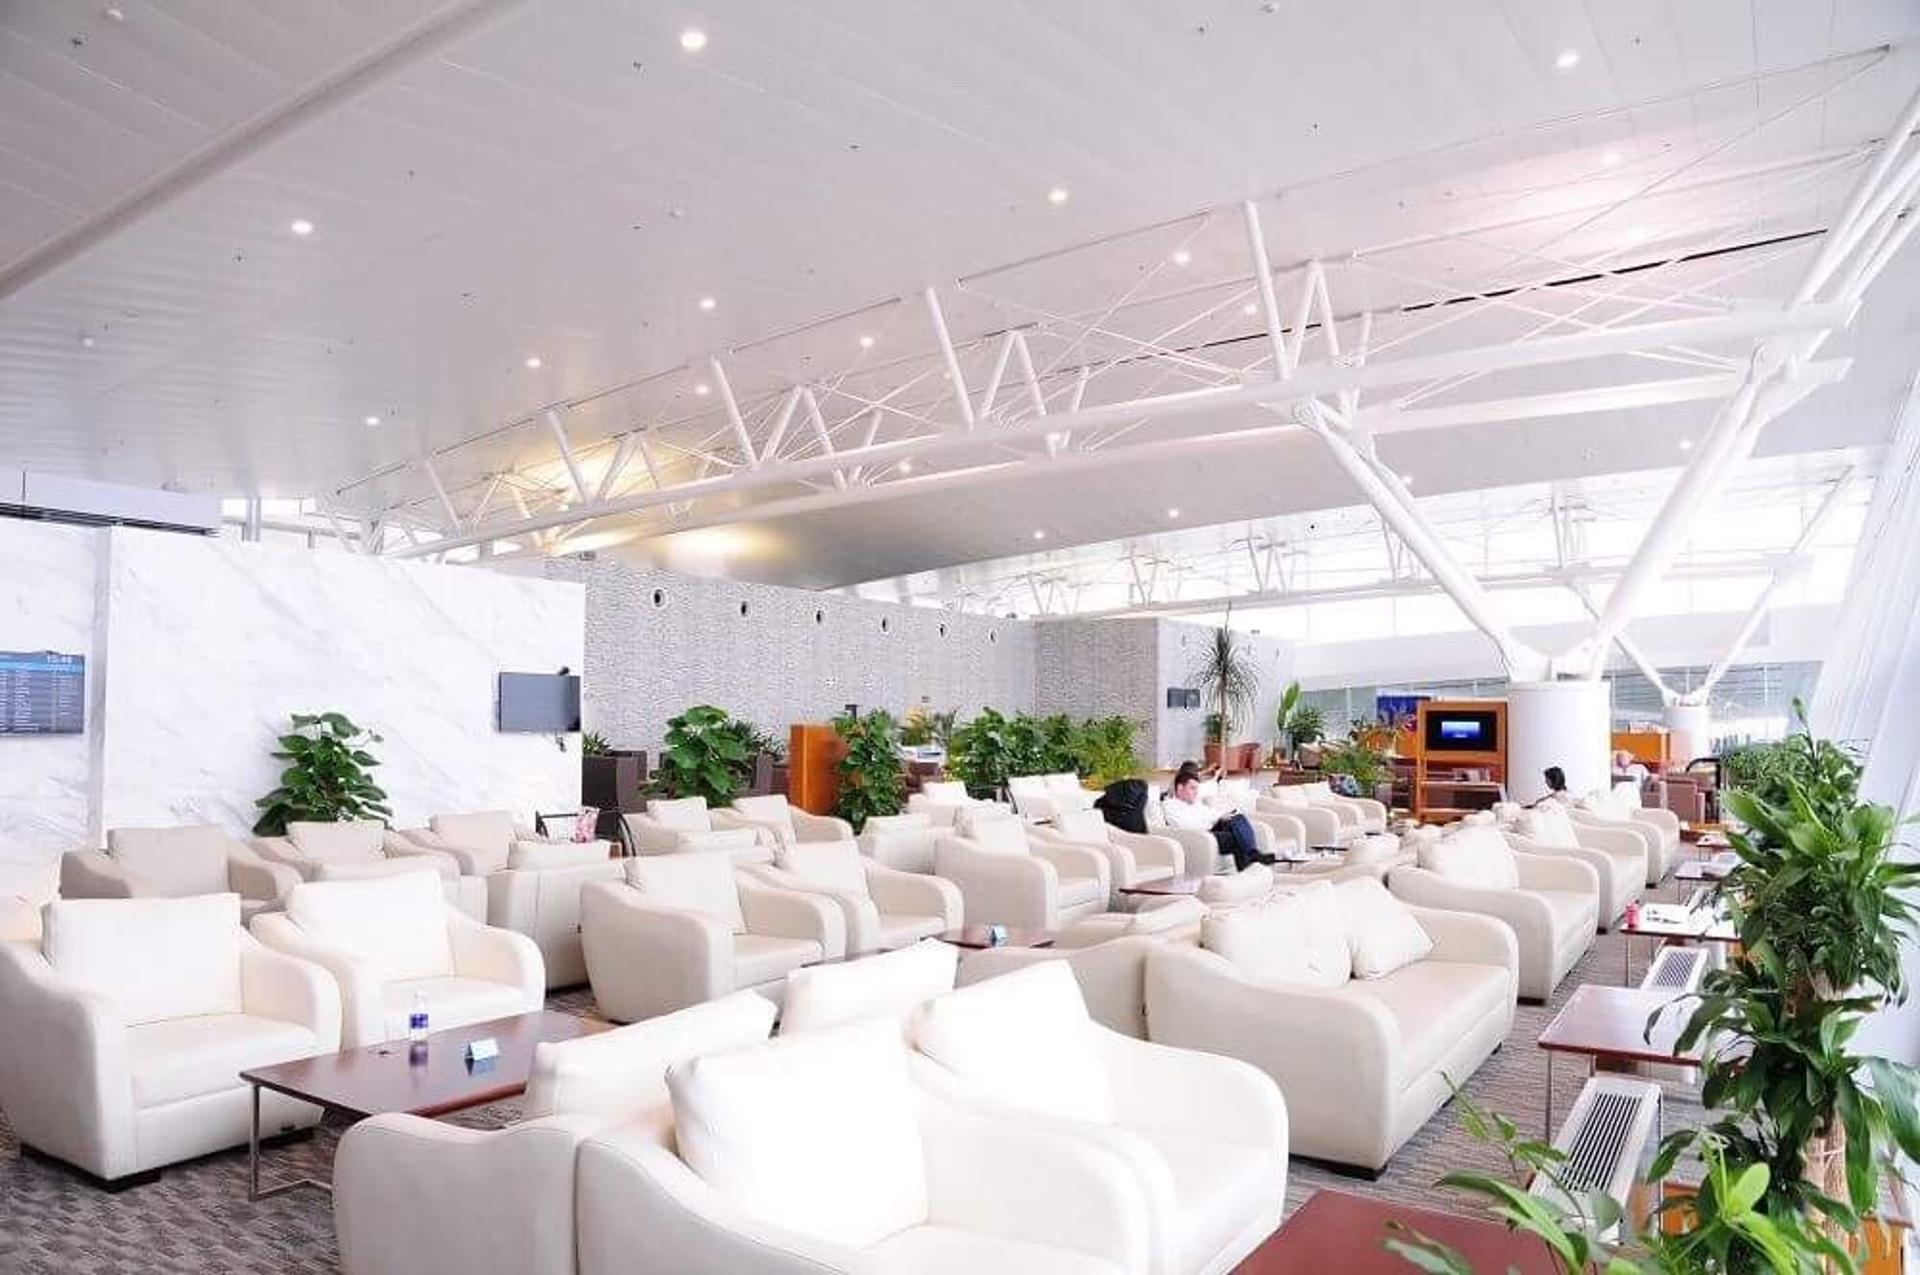 Noi Bai International Airport Business Lounge image 18 of 26